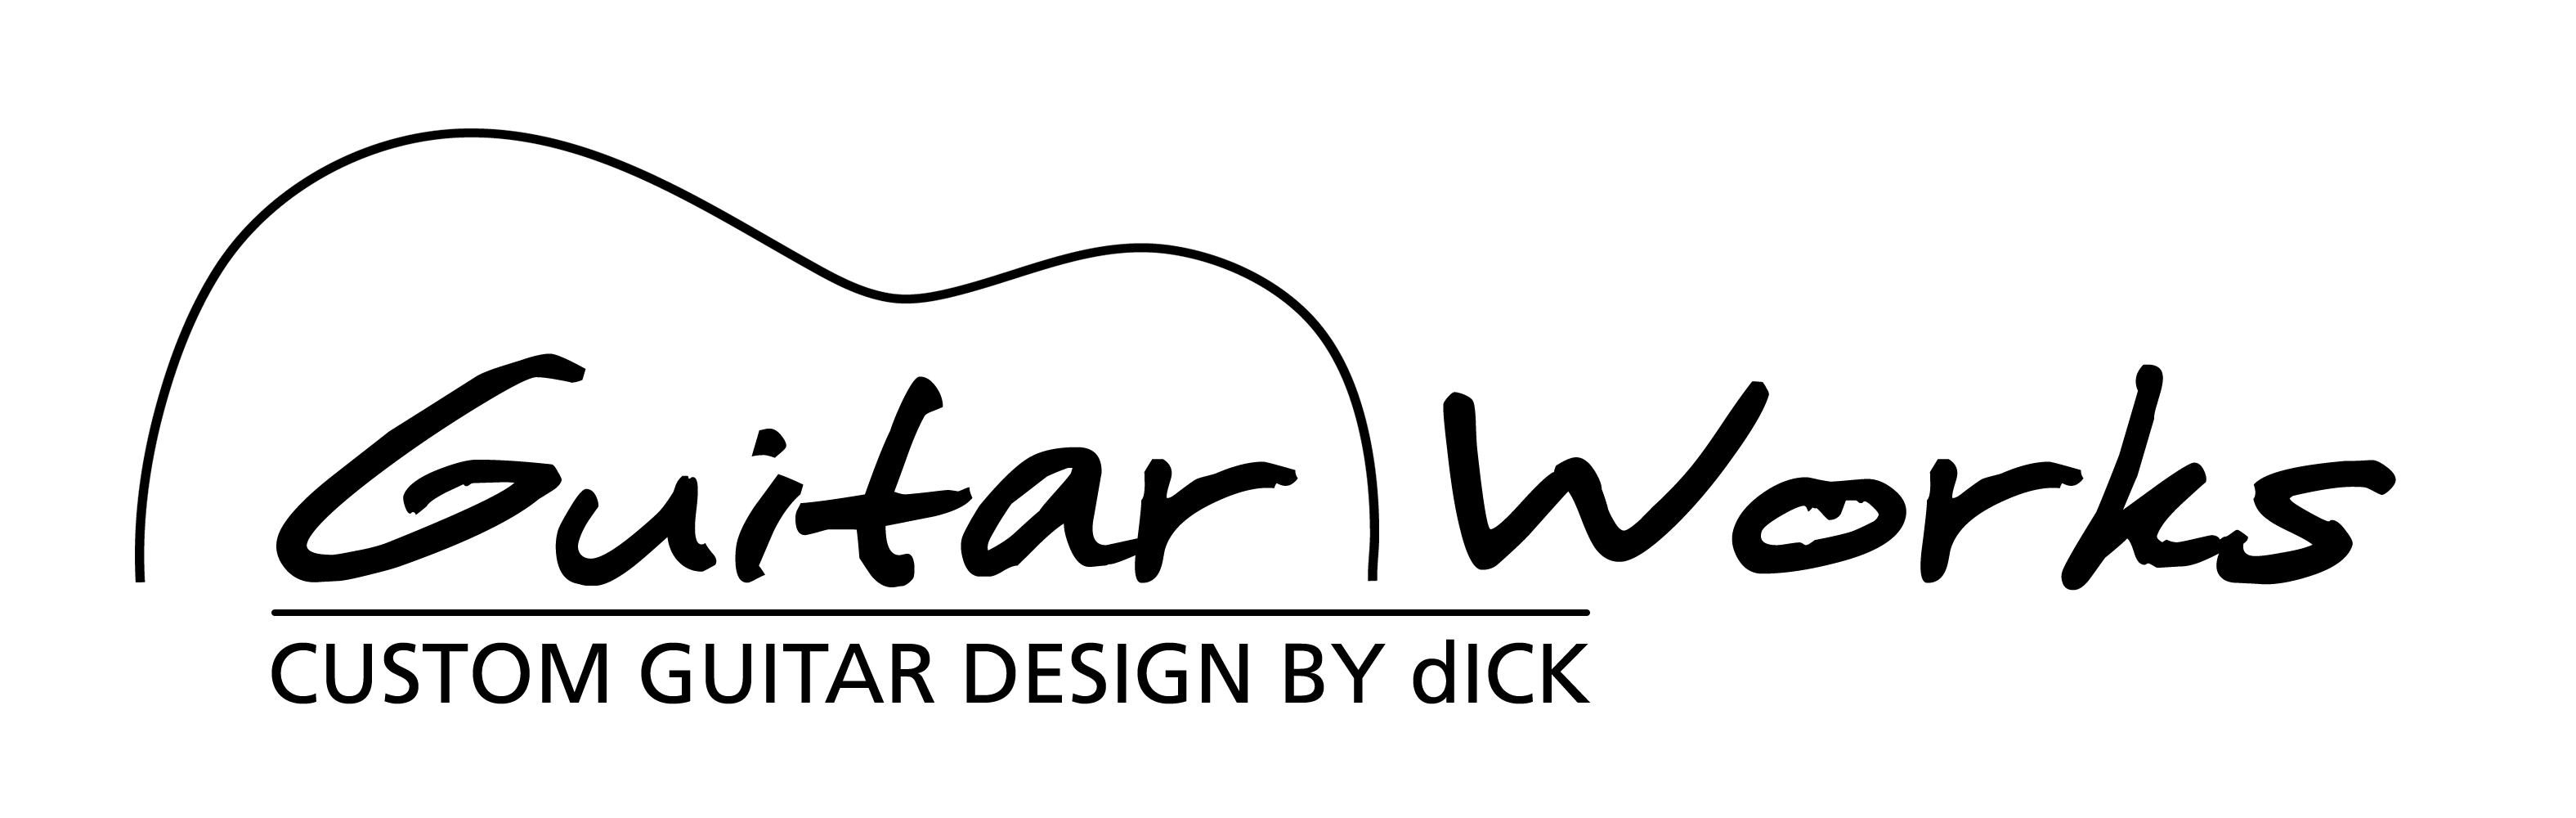 guitarworks logo